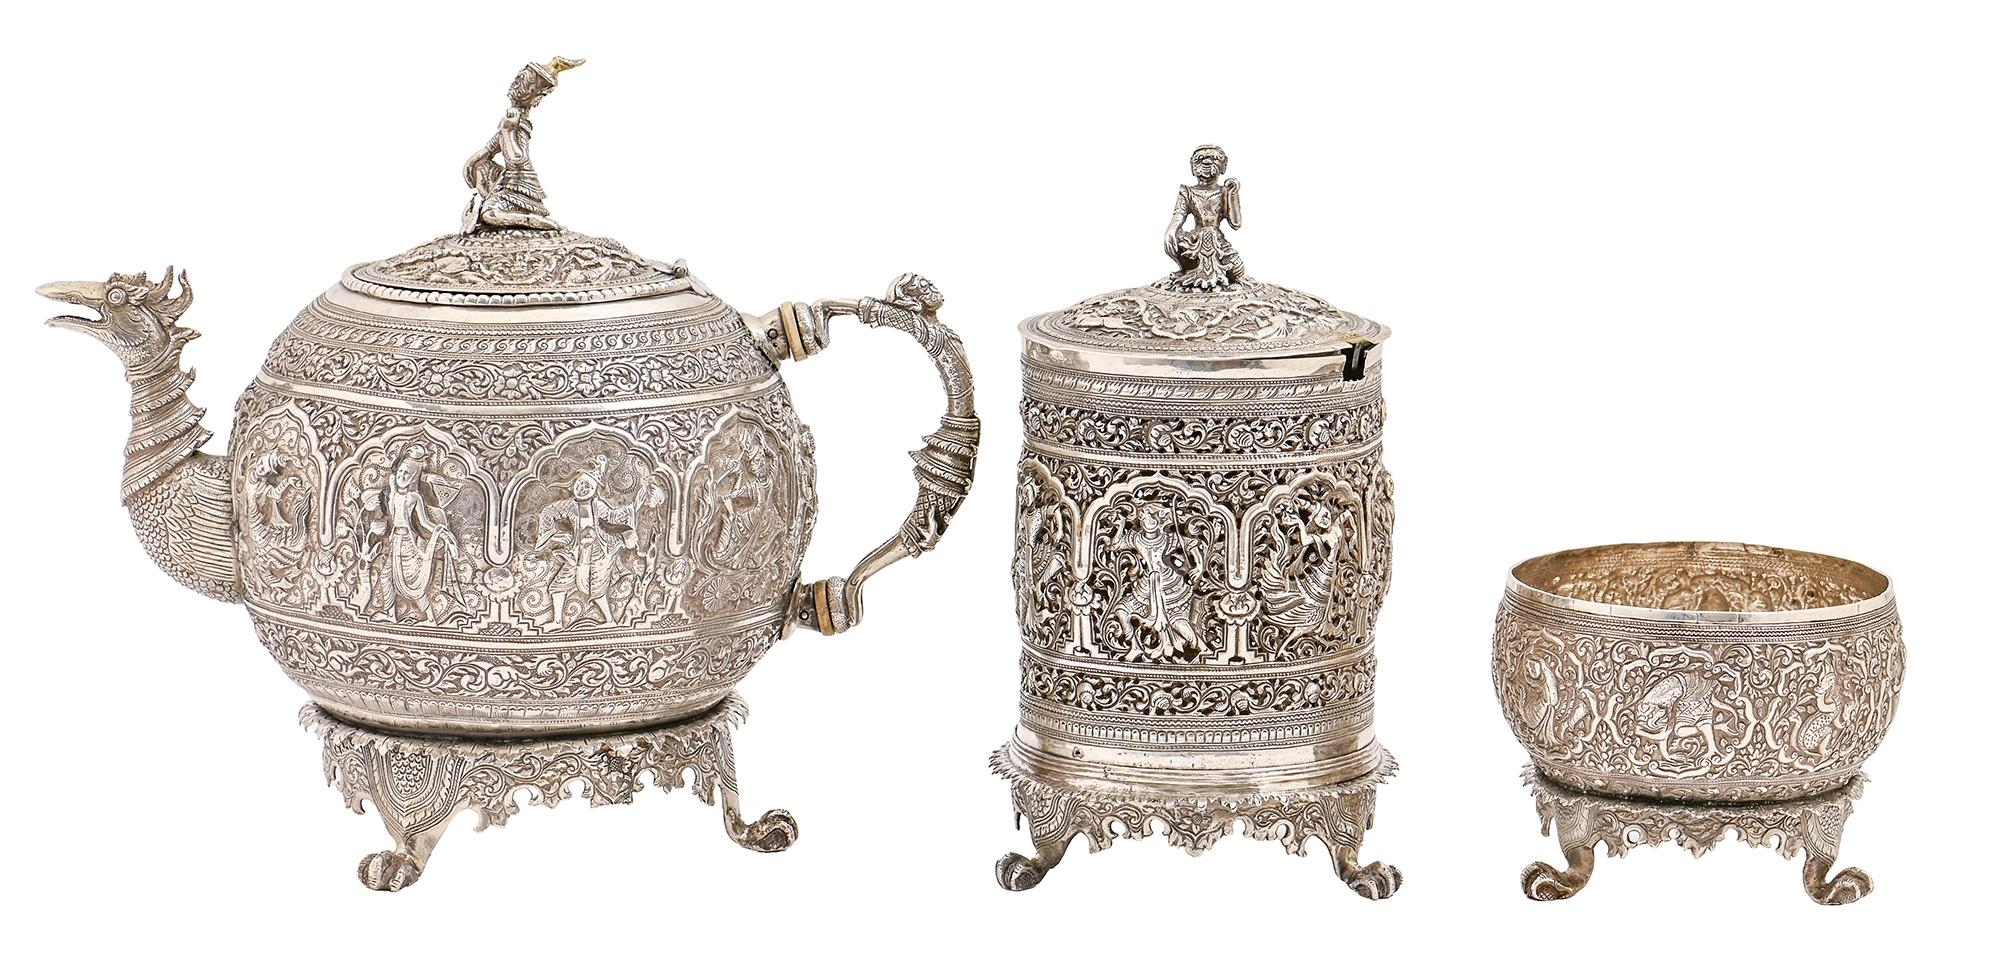 An extraordinary and heavy Burmese globular silver teapot, sugar bowl and betel box and cover,